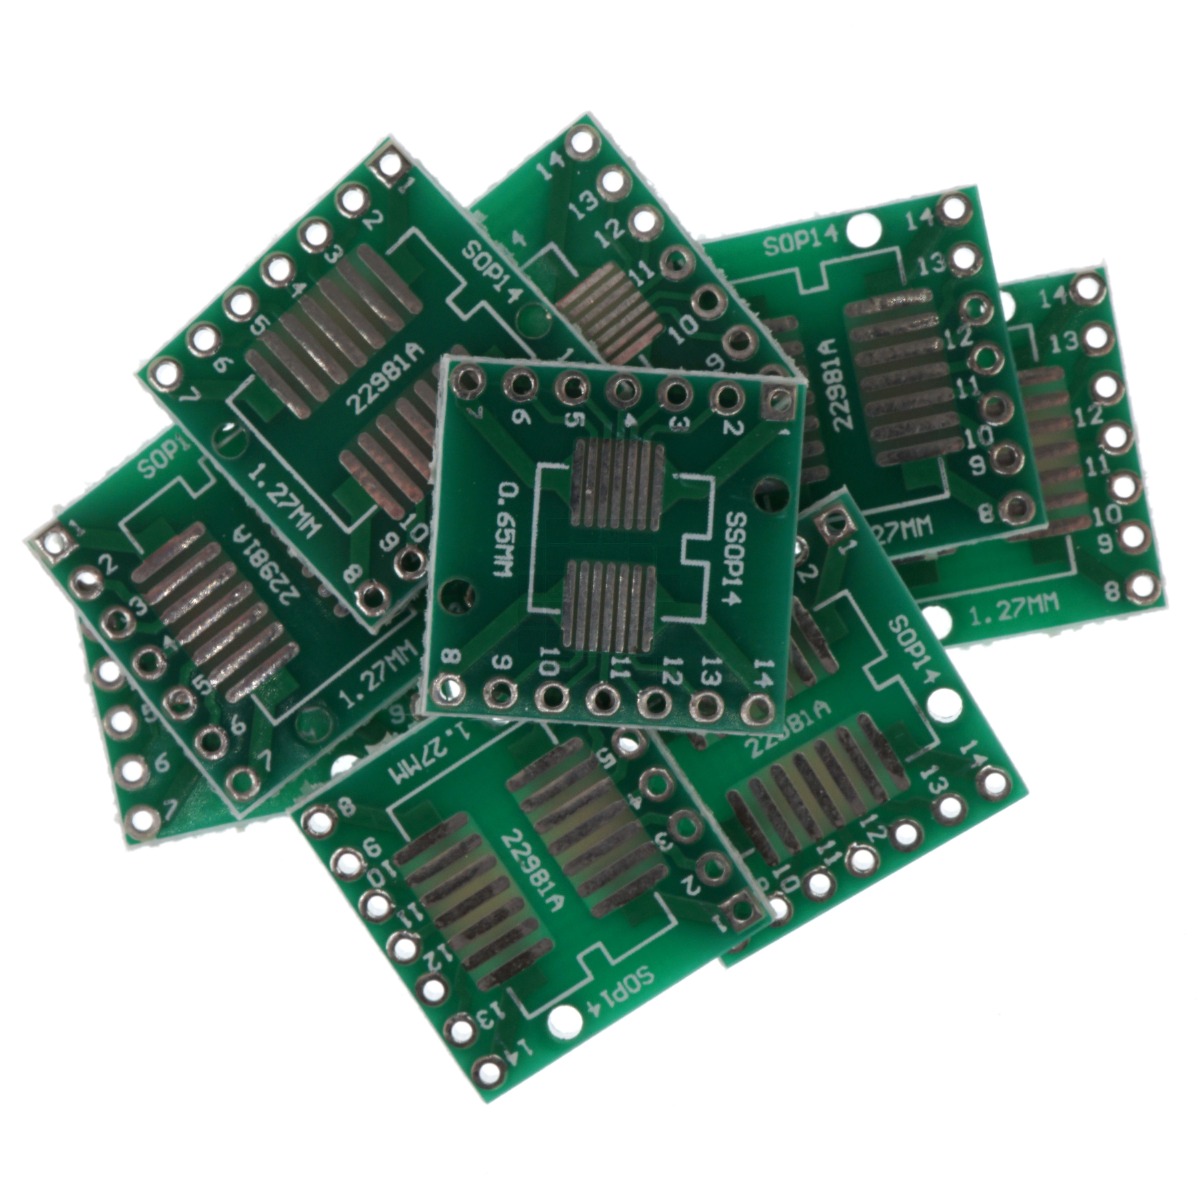 SOP14 0.65mm SSOP 1.27mm to DIP14W IC Adapter Converter Circuit Board PCB, 10-Pack